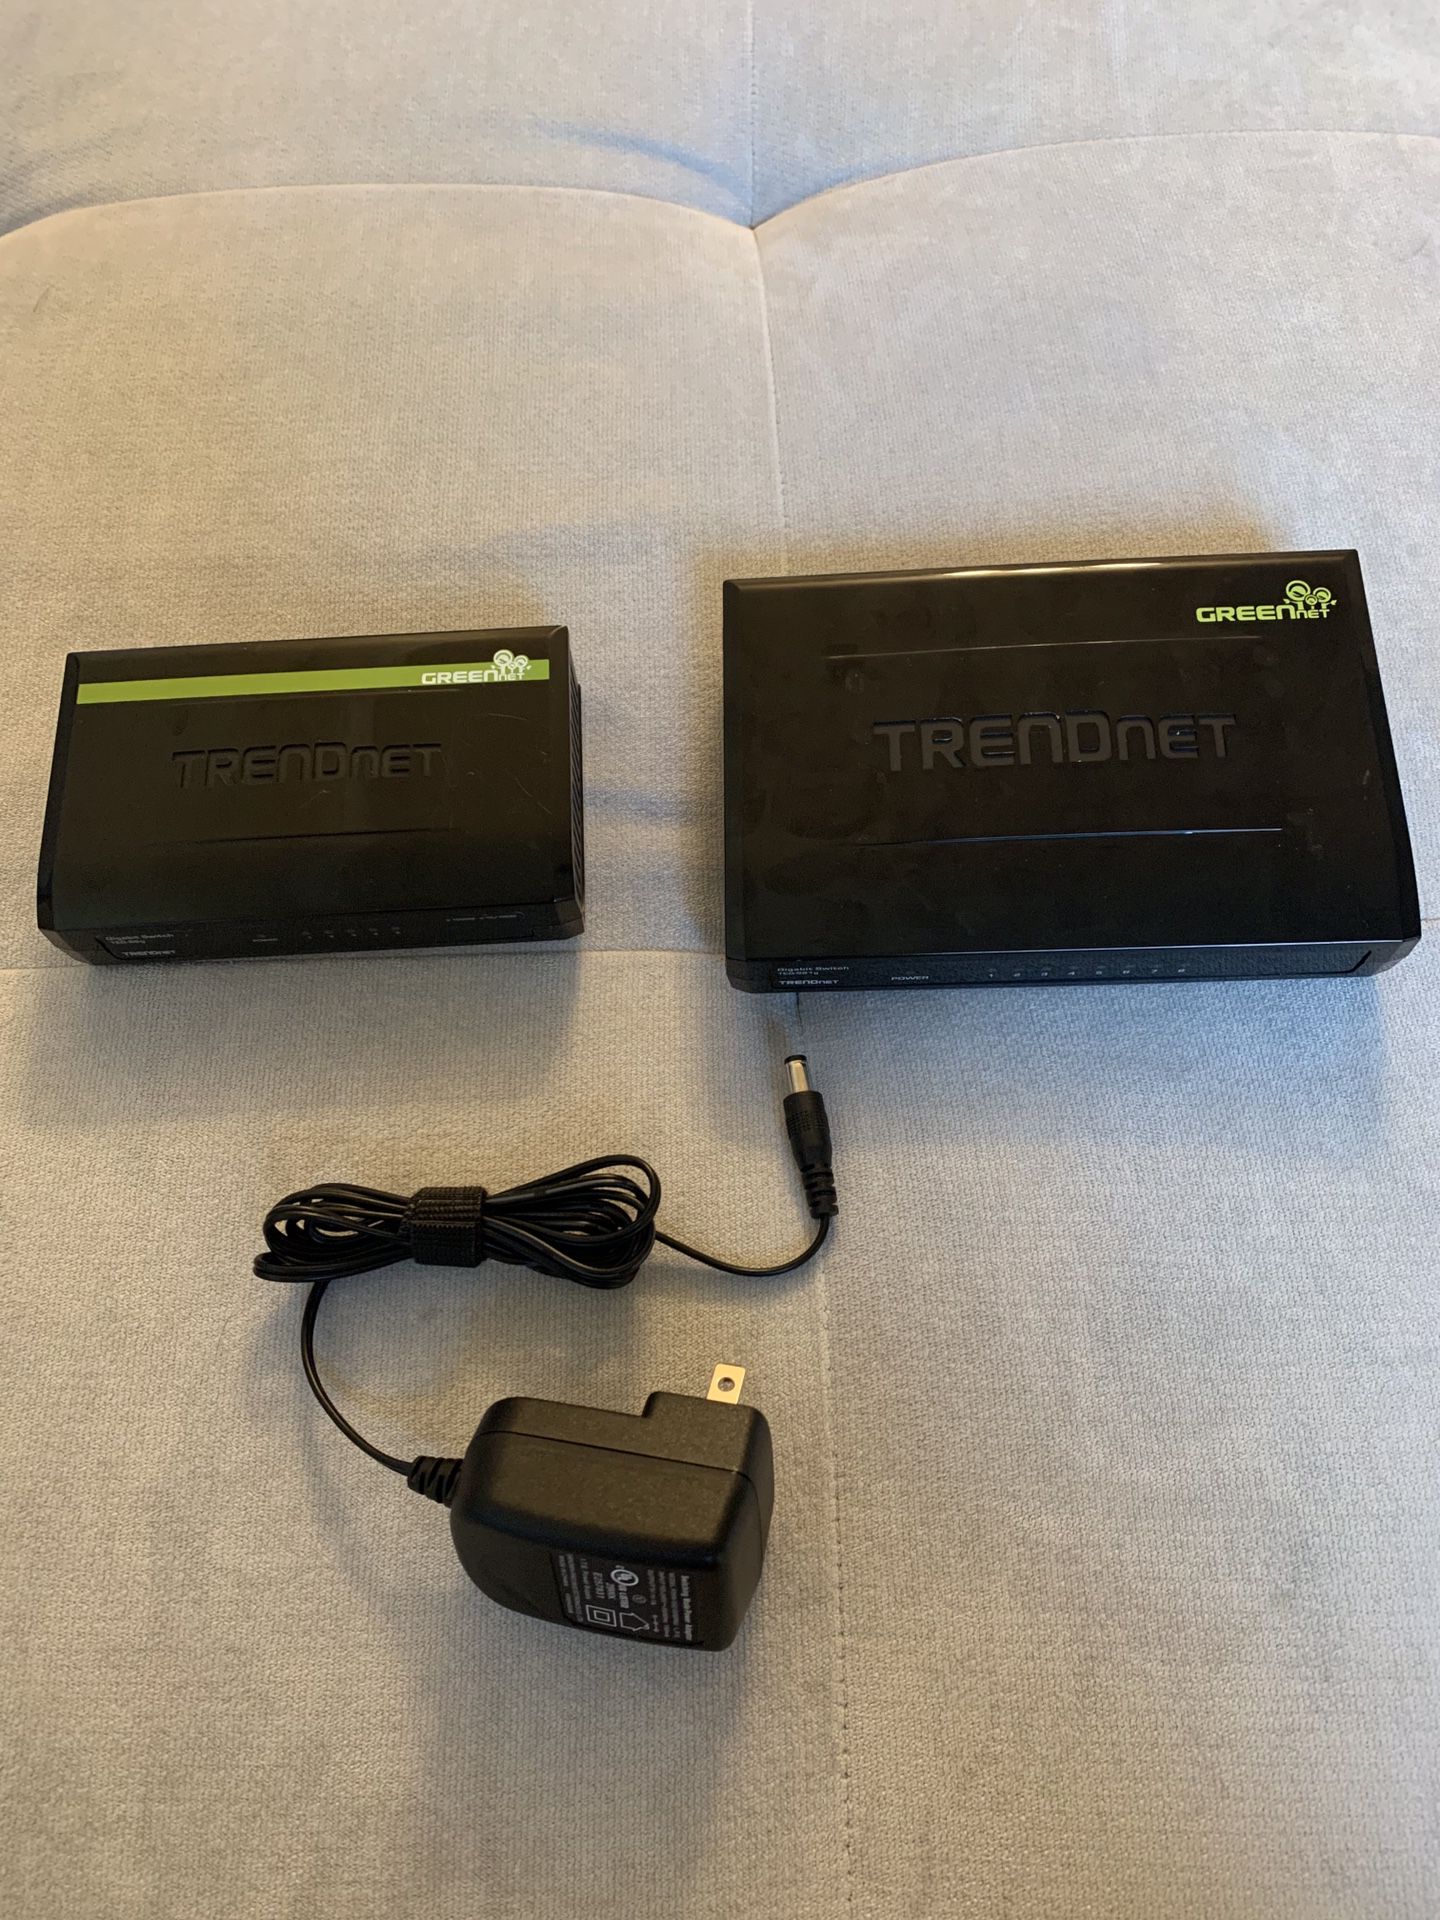 TRENDnet 5-Port and TRENDnet 8-Port Unmanaged Gigabit GREENnet Desktop Plastic Housing Switches (Bundle)